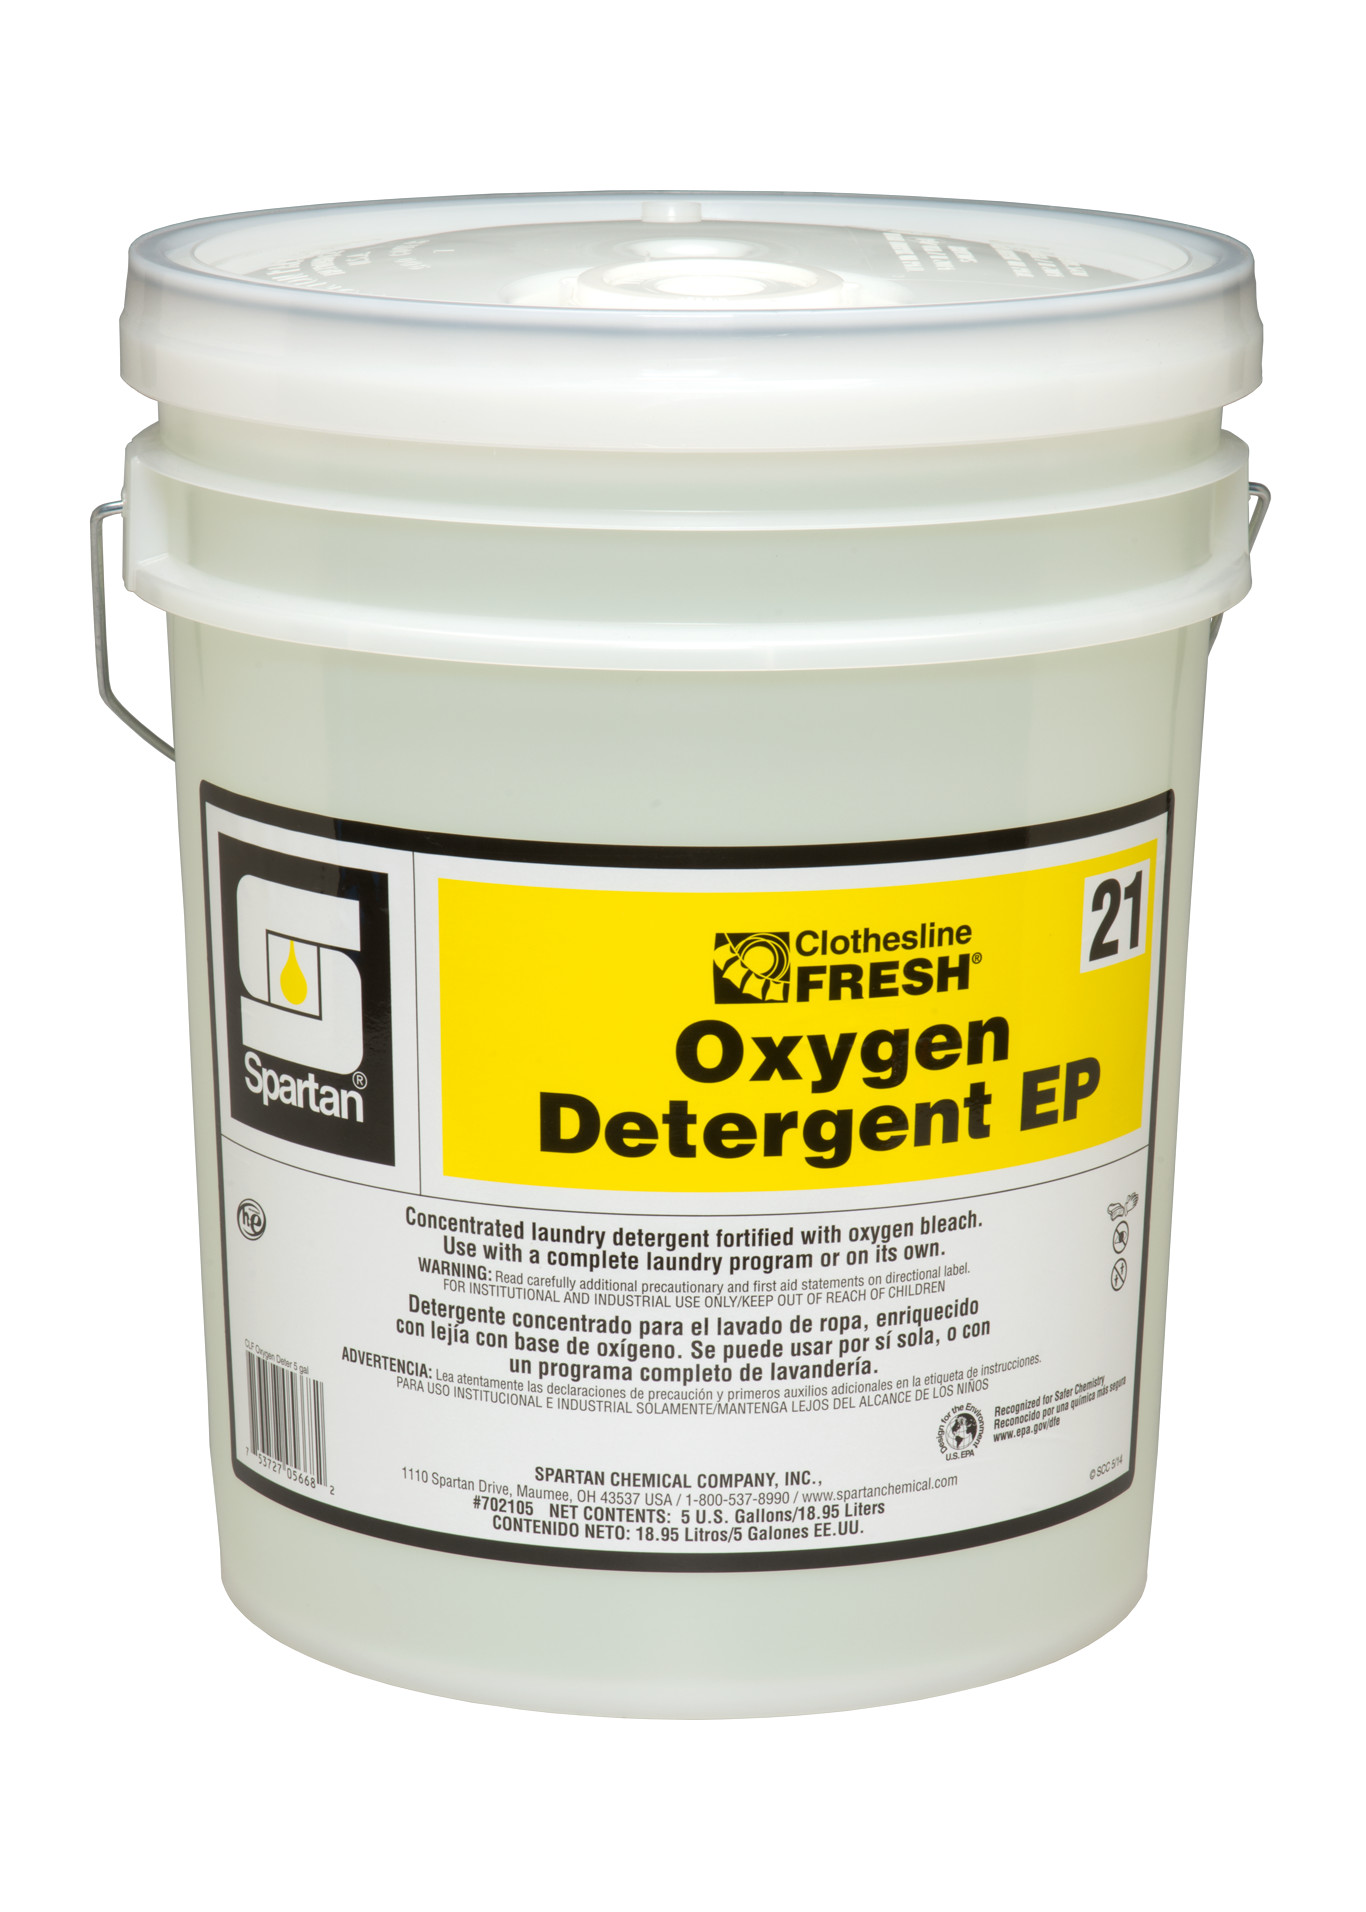 Spartan Chemical Company Clothesline Fresh Oxygen Detergent EP 21, 5 GAL PAIL